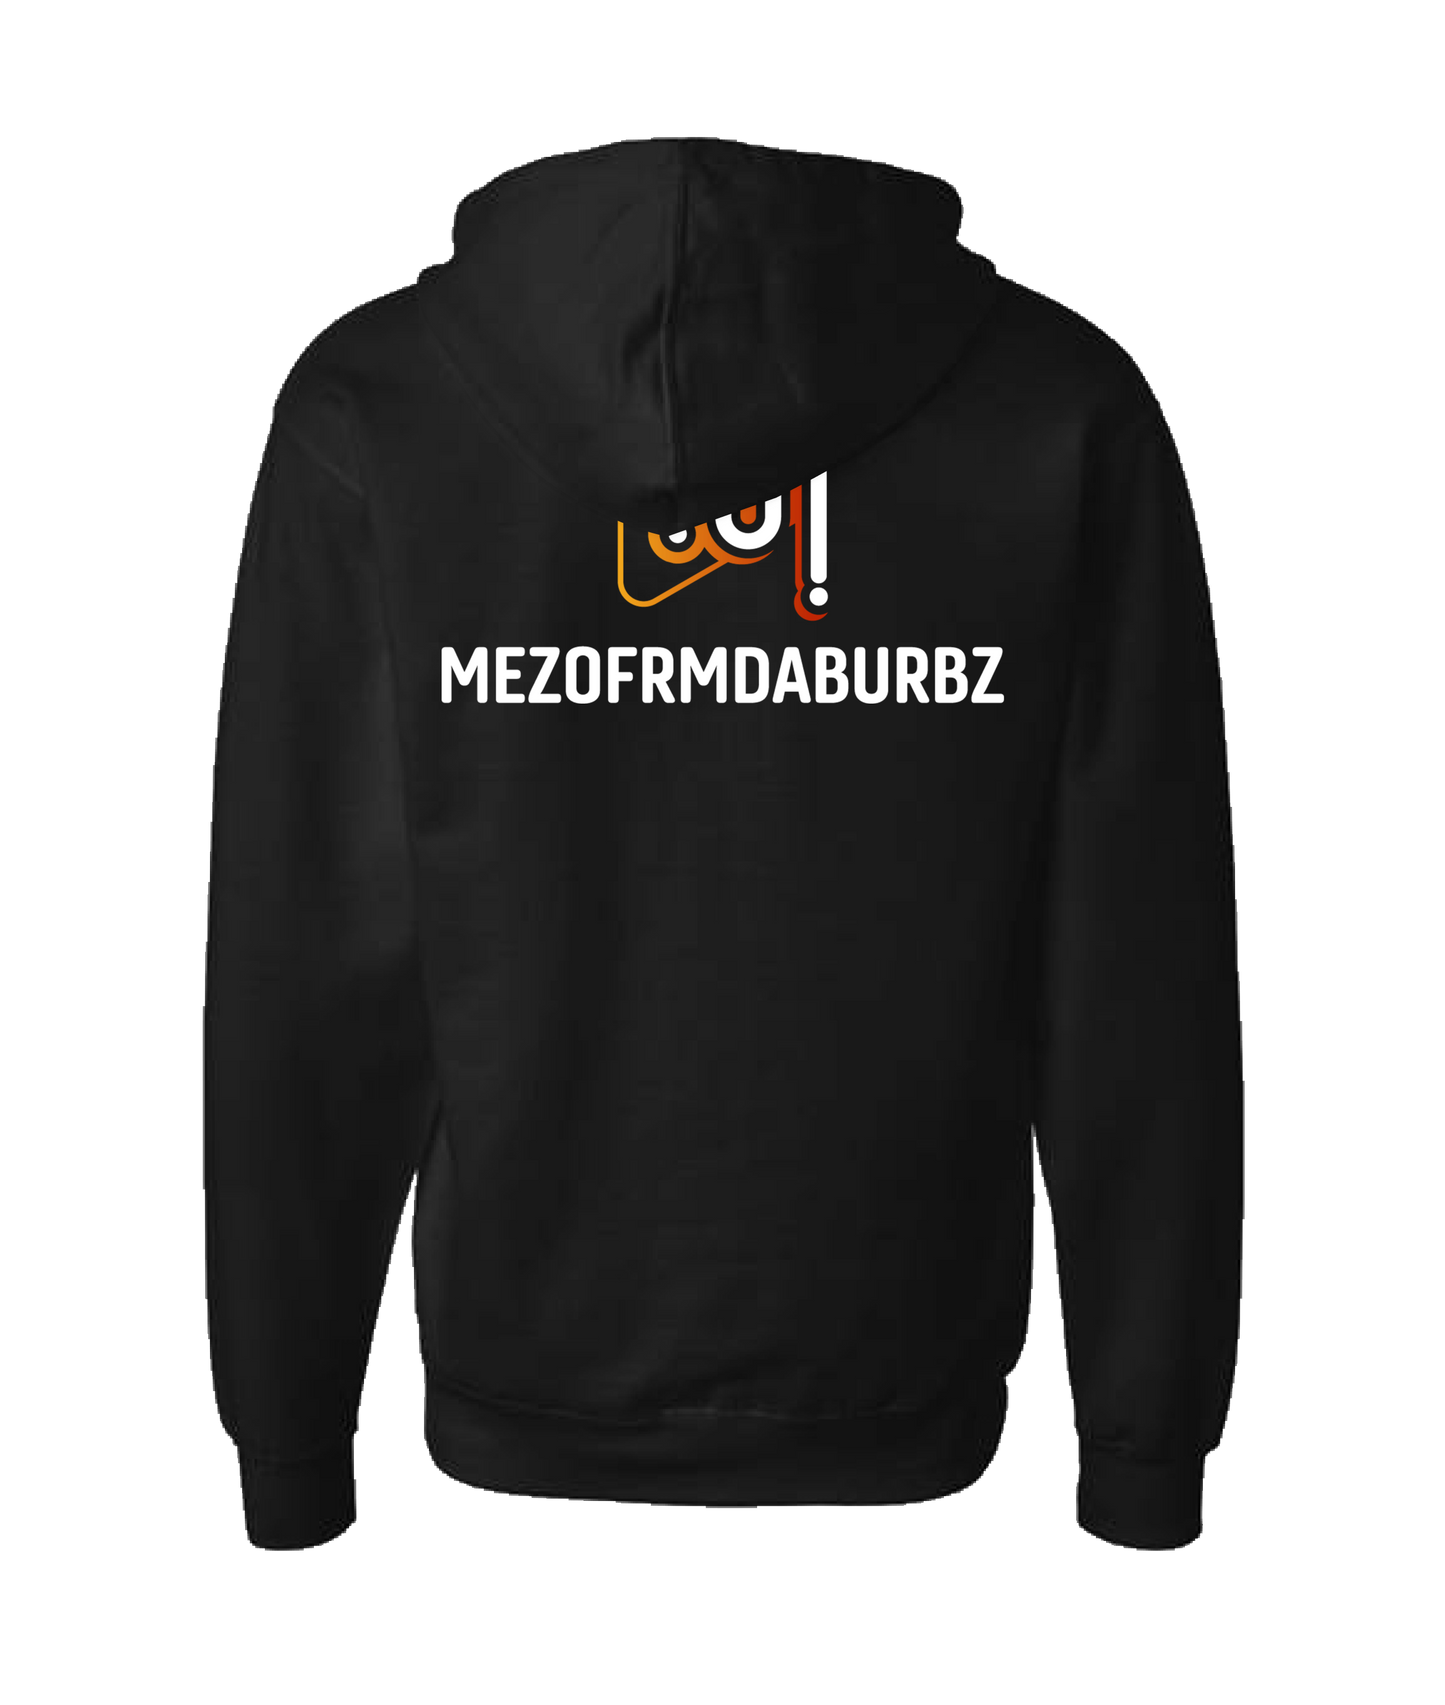 Mezofrmdaburbz - BURBZ - Black Zip Up Hoodie